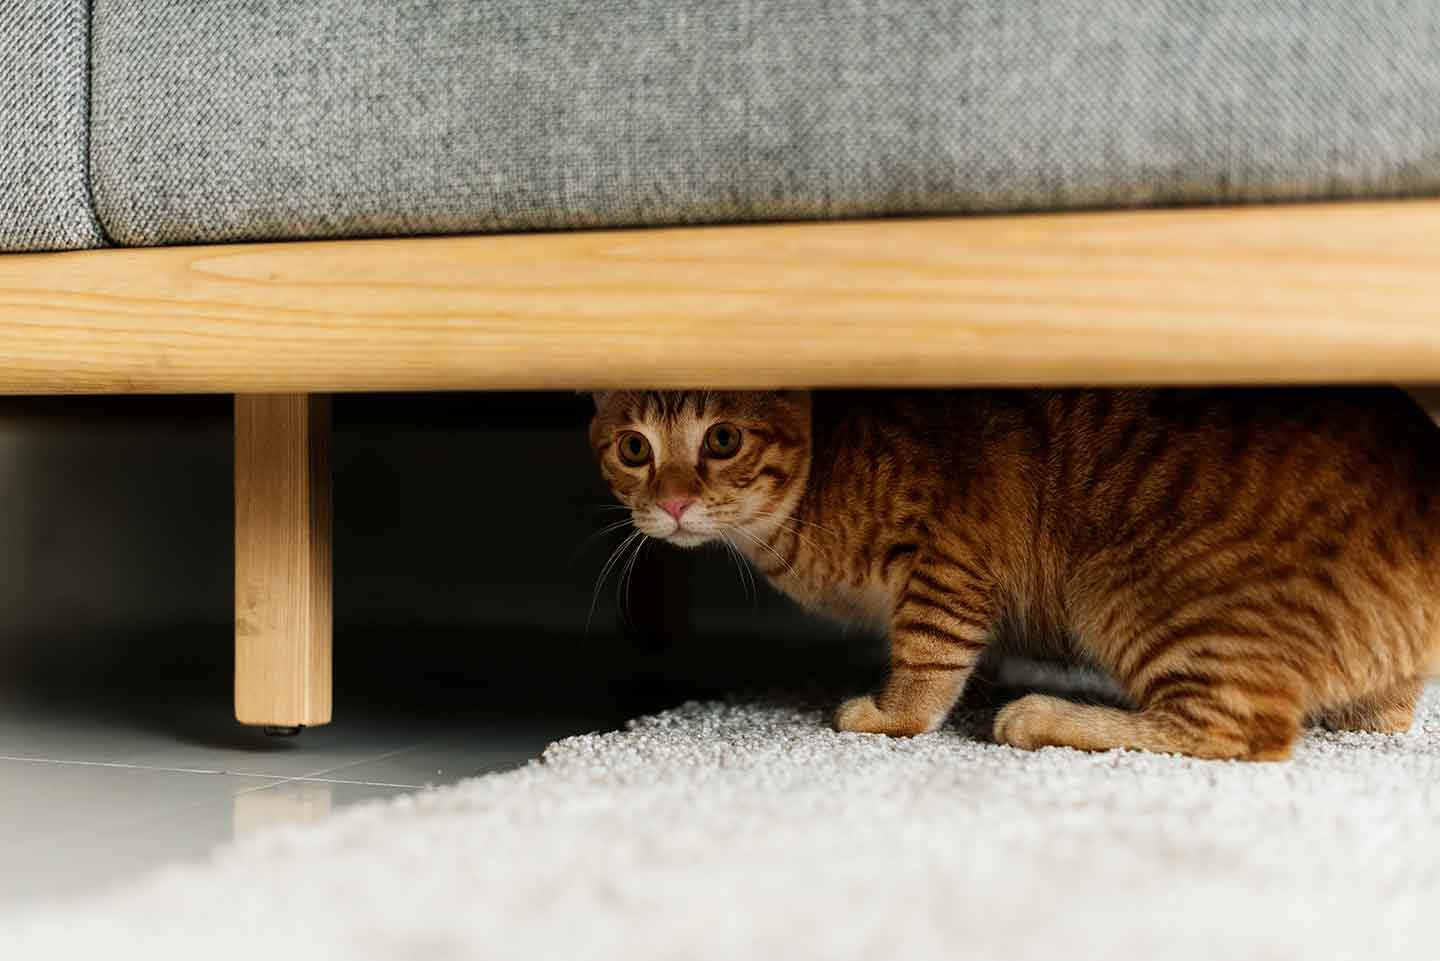 An orange cat hiding under a couch